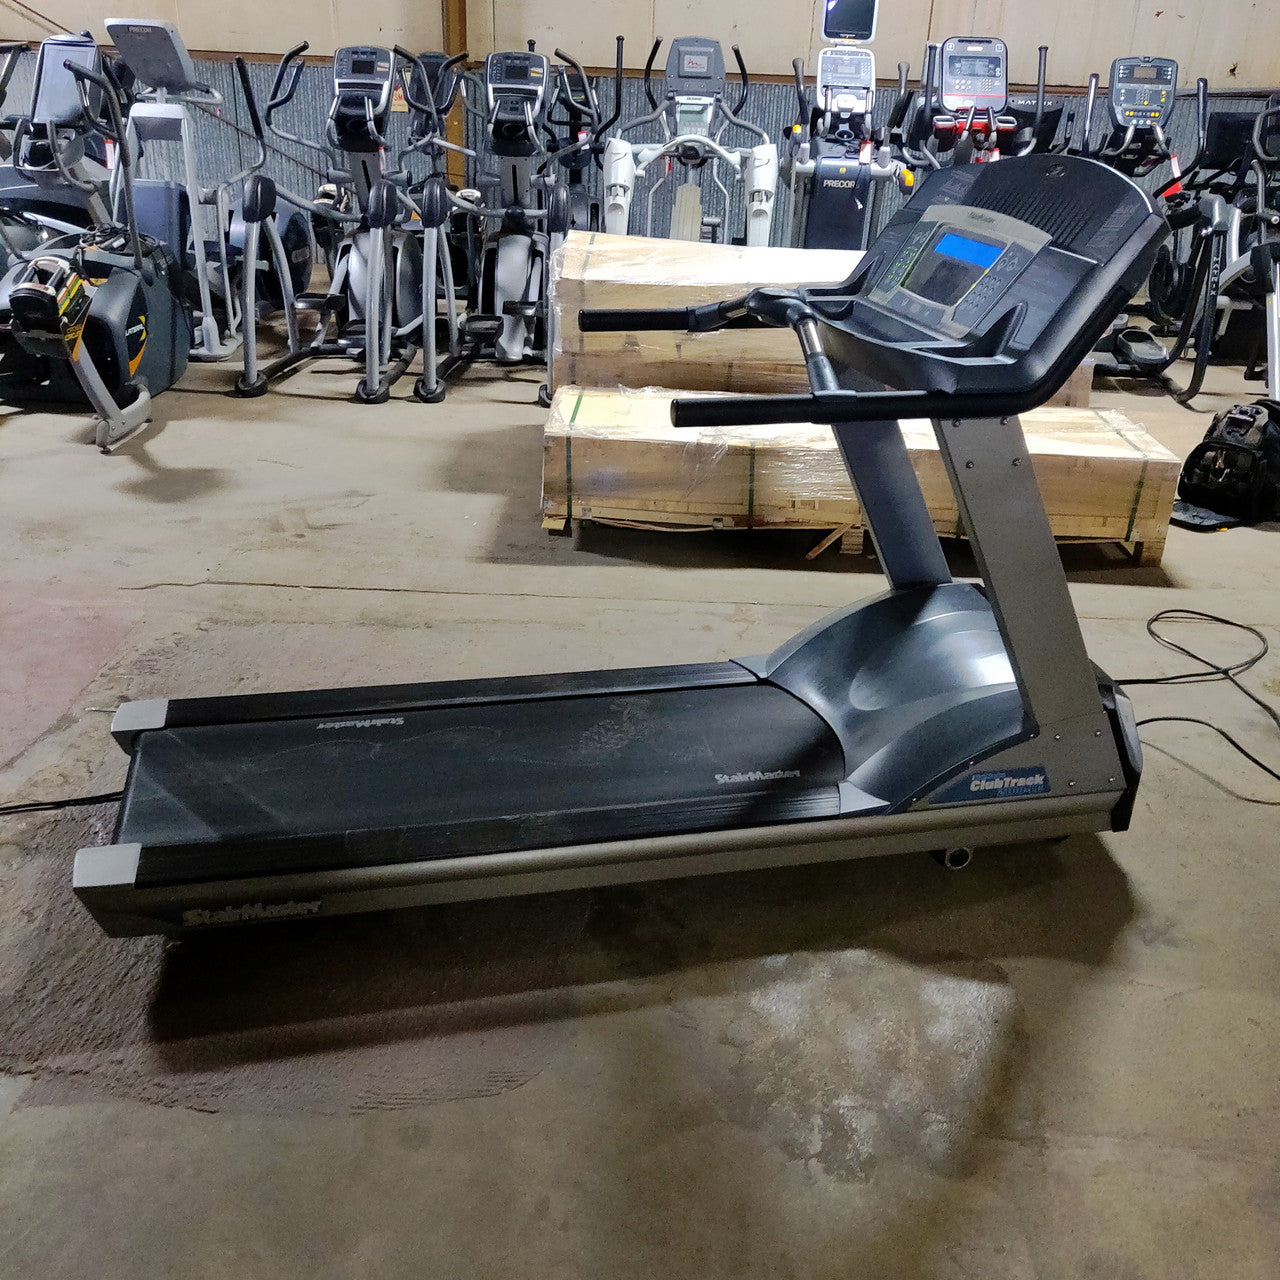 Stairmaster Treadmill Club Track 2100